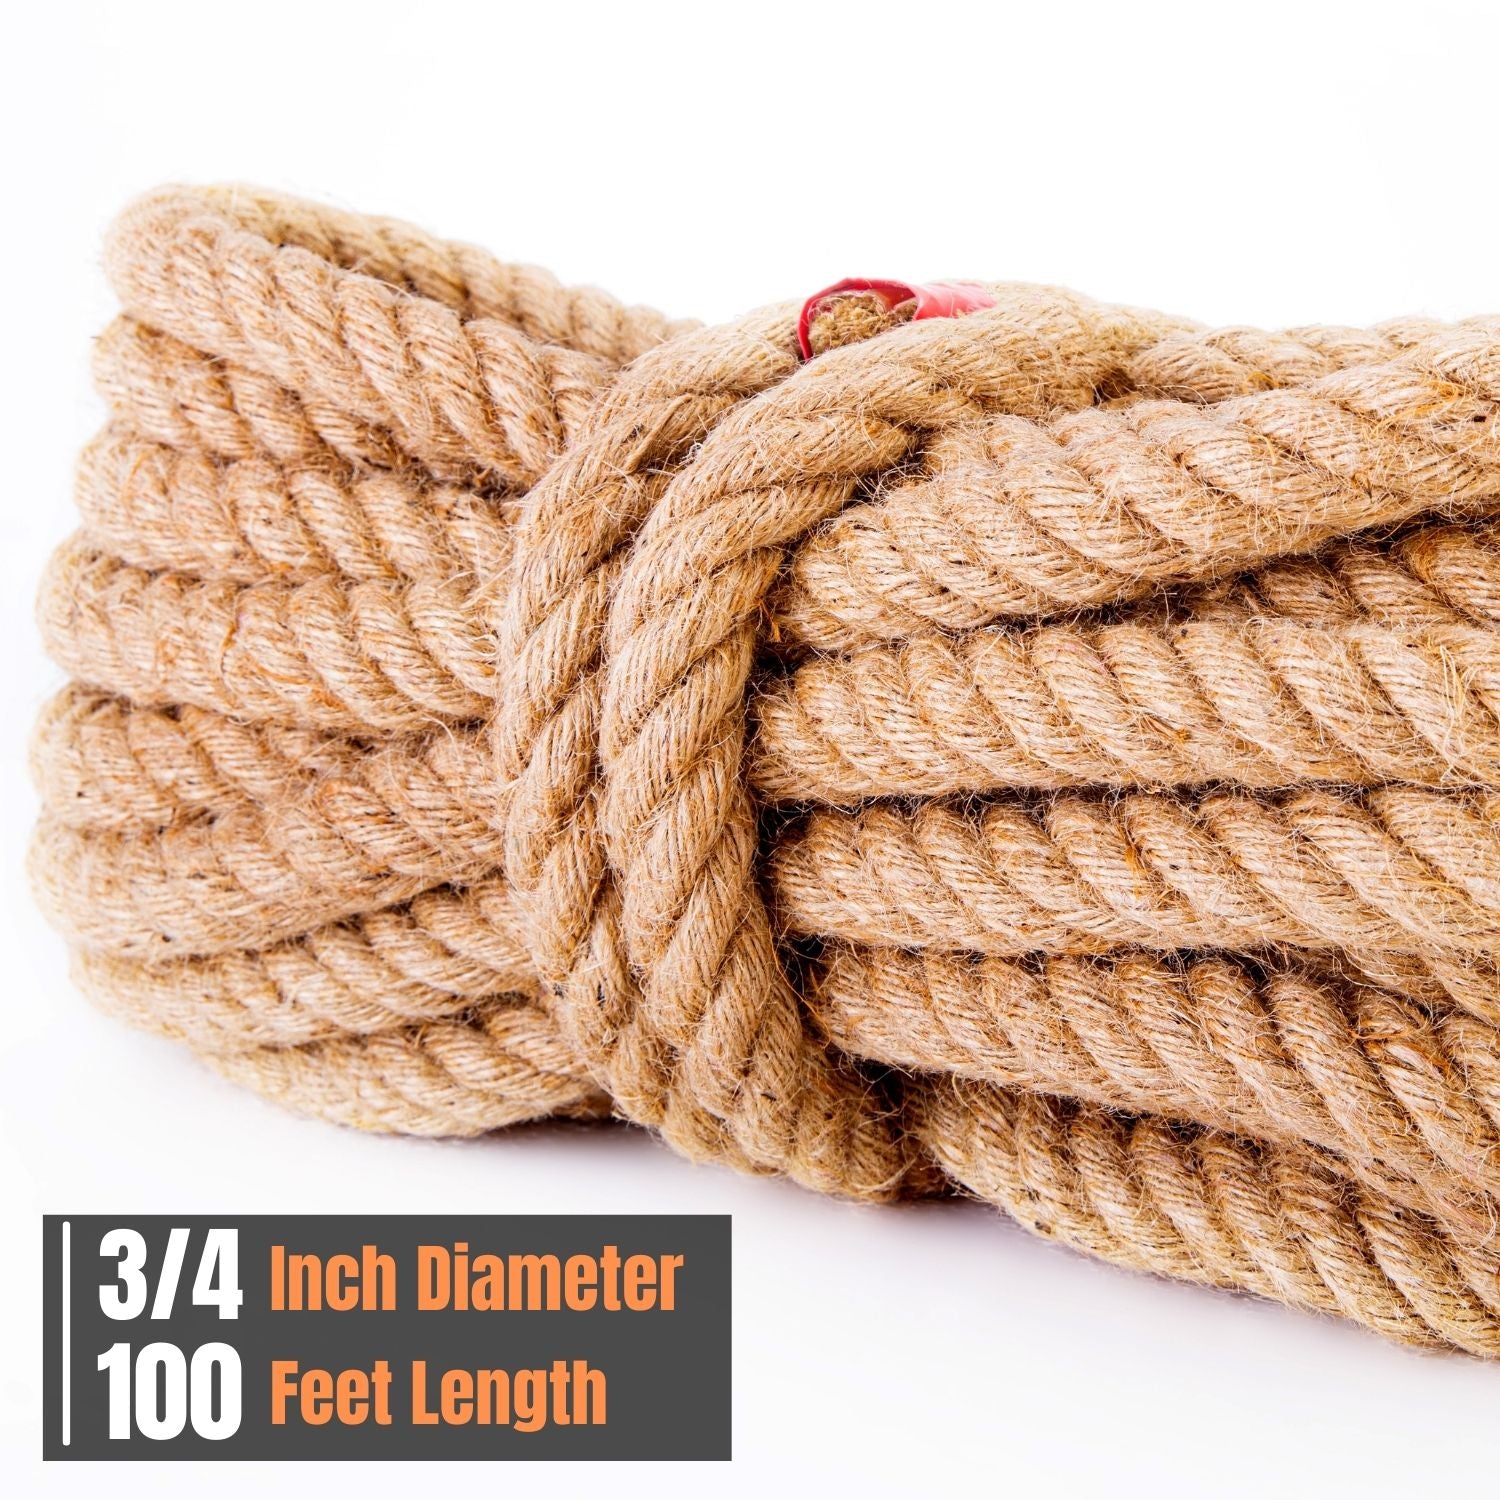 Manila Rope 3/4″×100′- Nautical Ropes - Natural Jute Rope - Large Decorative Hemp Rope - Thick Heavy Duty 